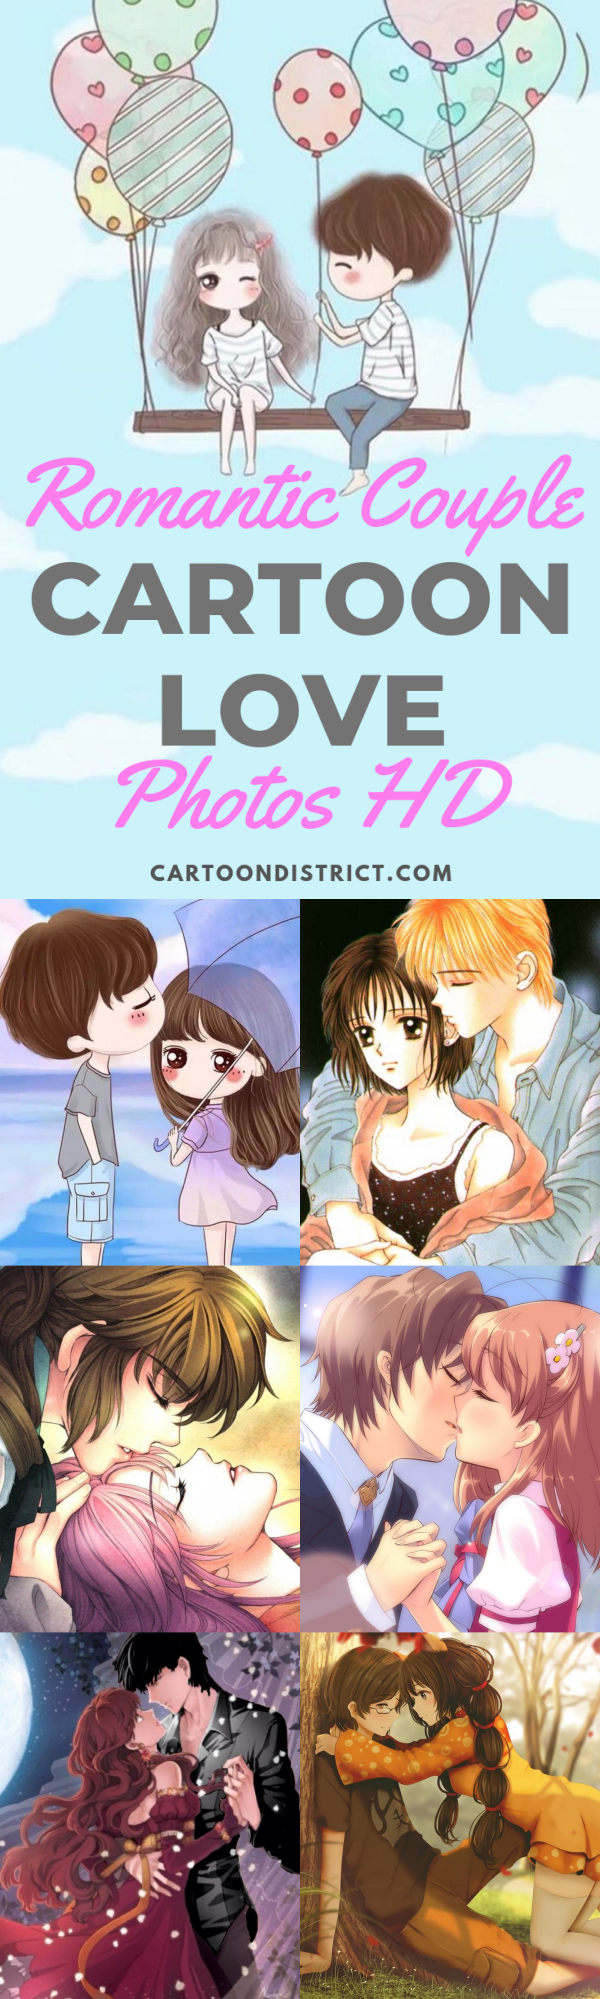 Romantic Couple Cartoon Love Photos HD